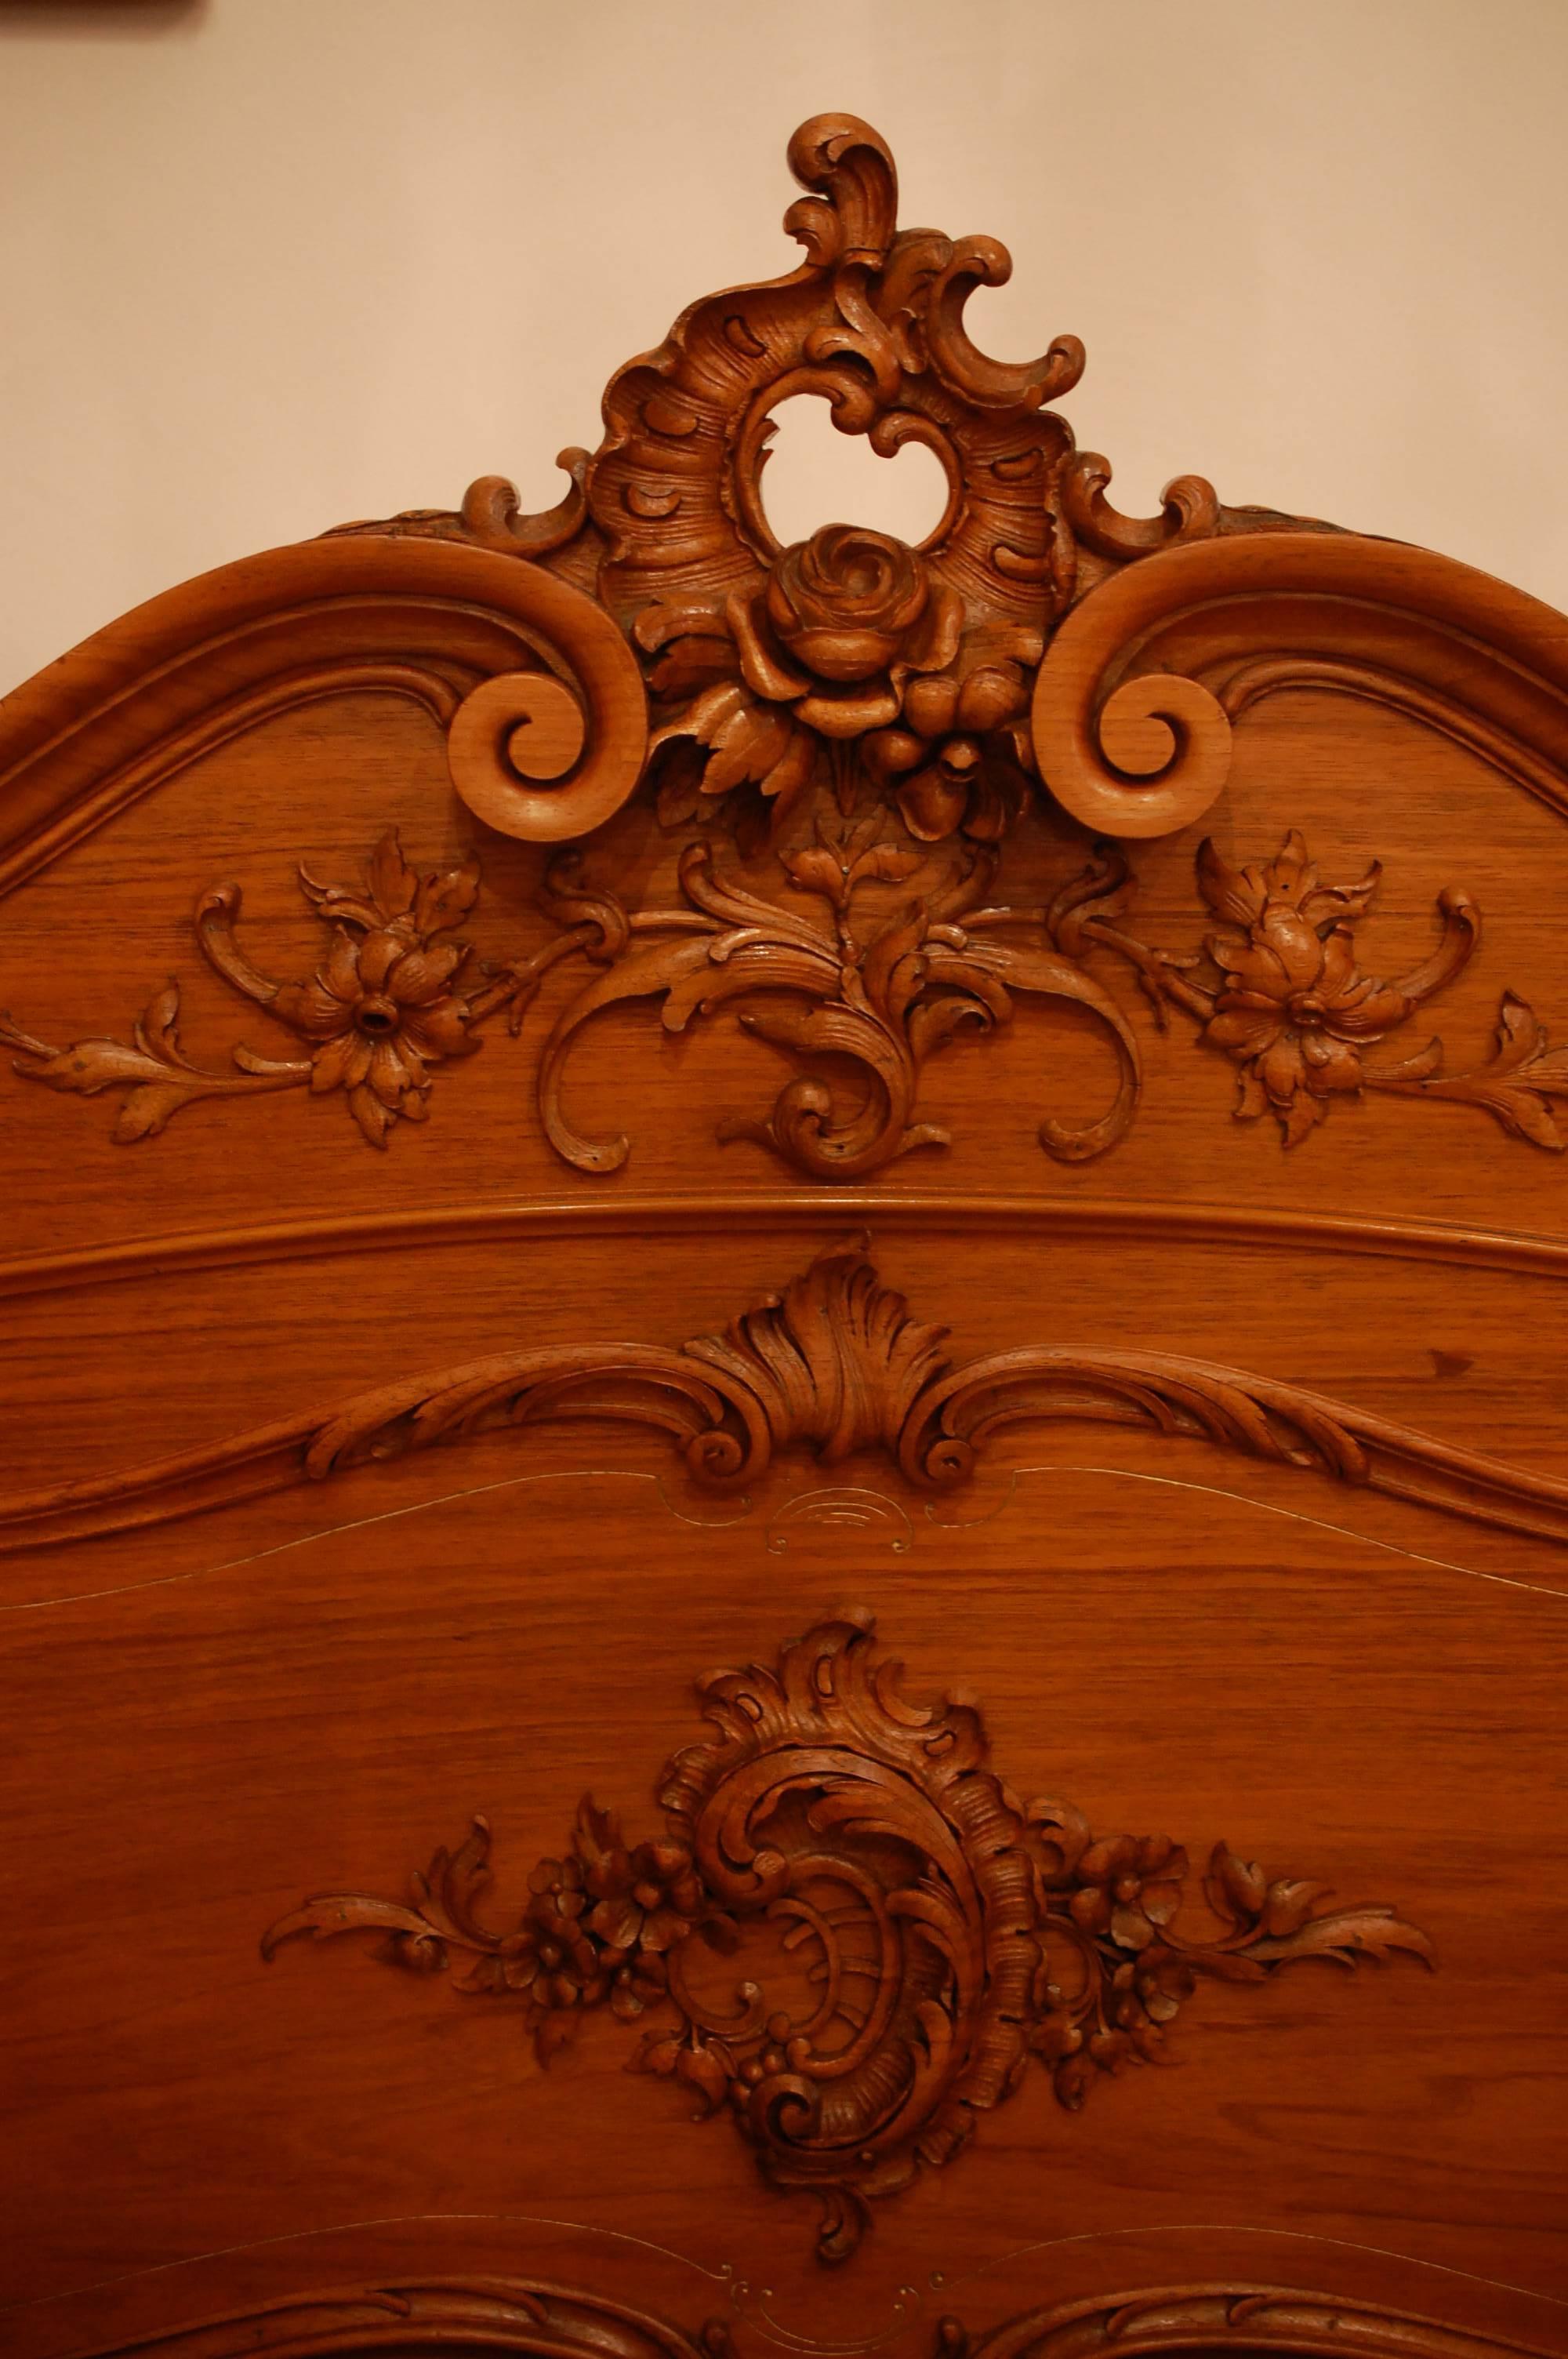 German Blüthner Art Case Piano Baroque-Rococo Sculpted Walnut Case, Gildings, Bronzes